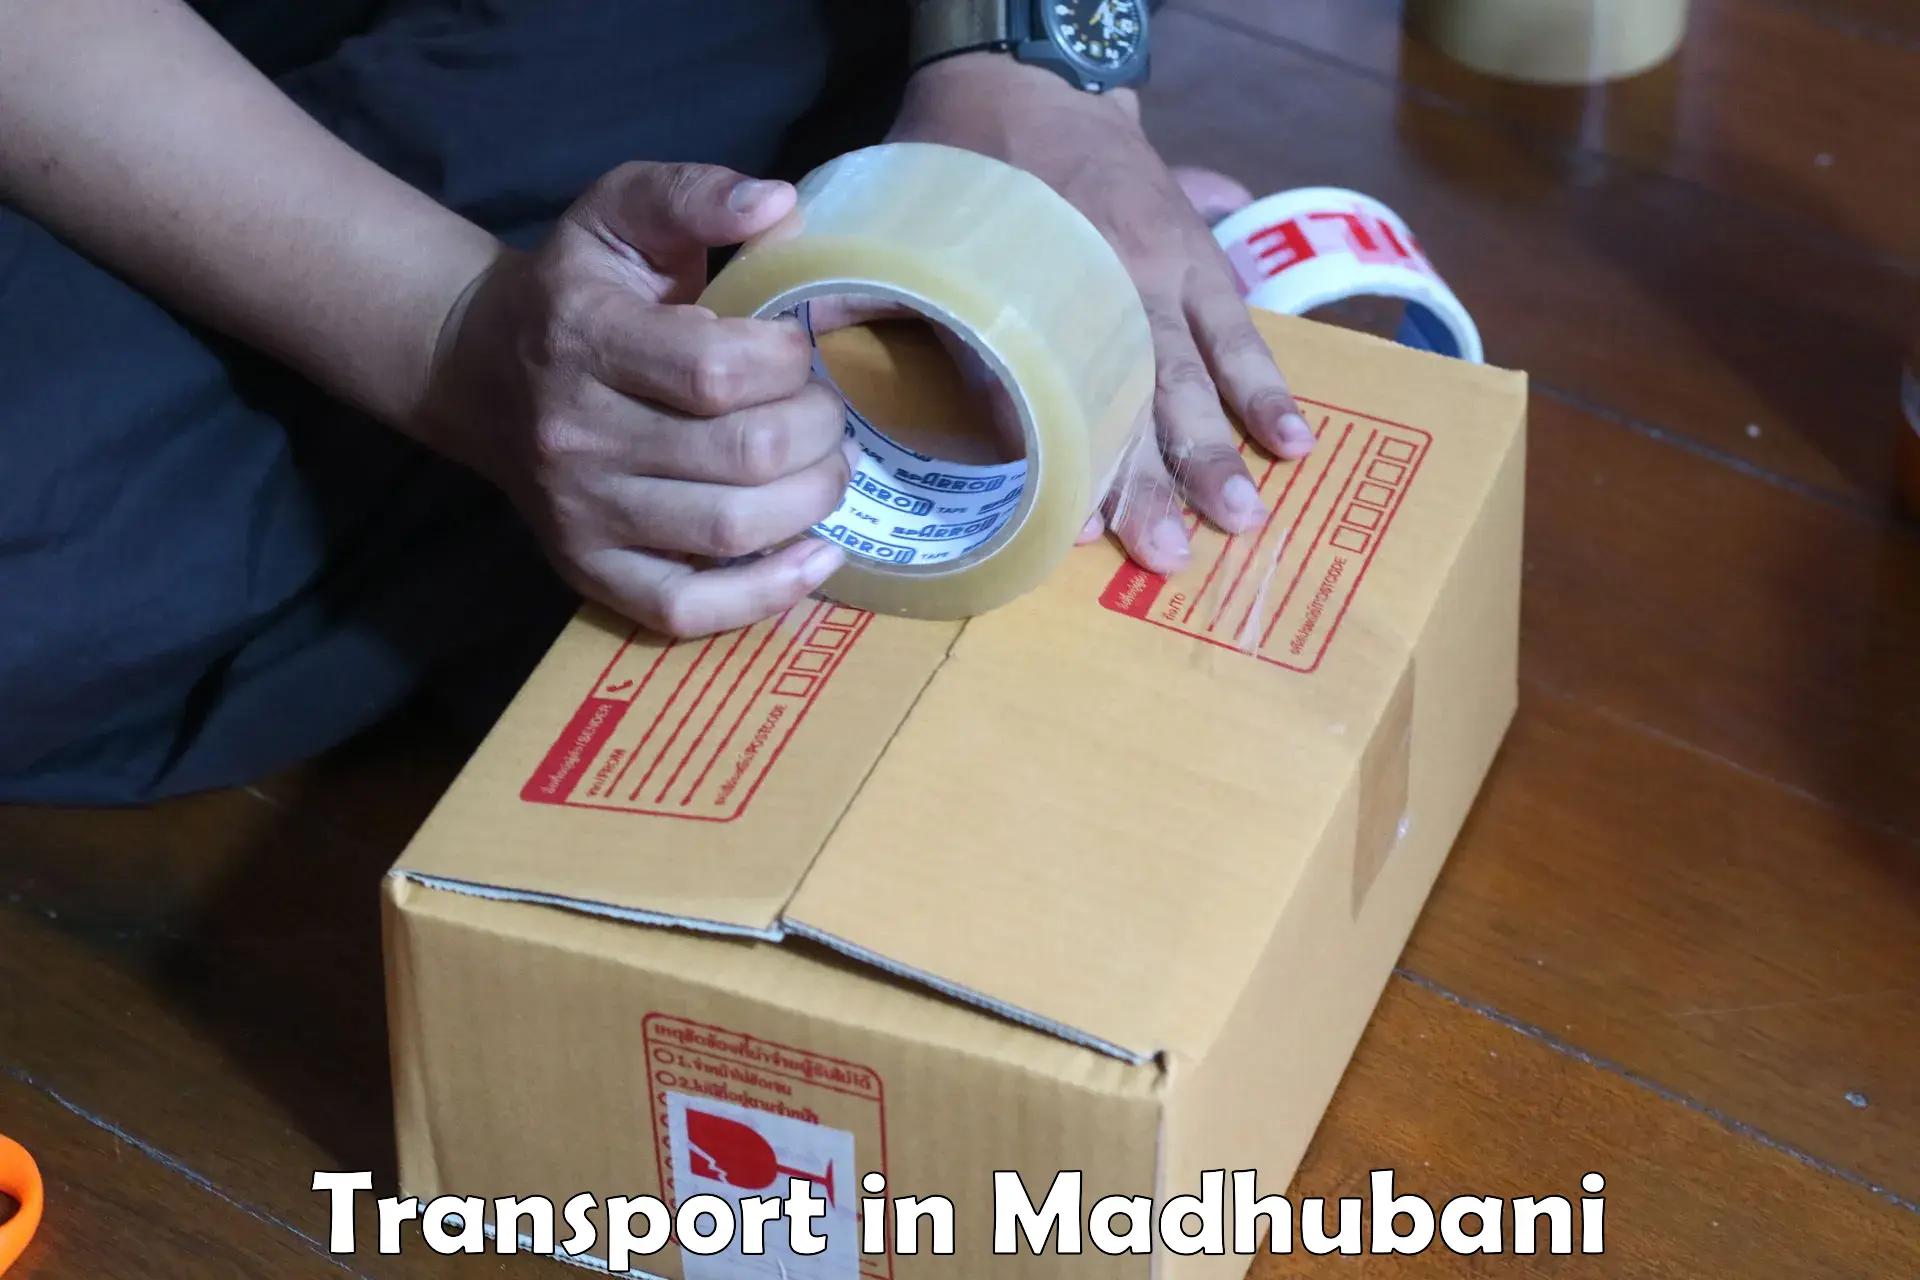 Vehicle transport services in Madhubani